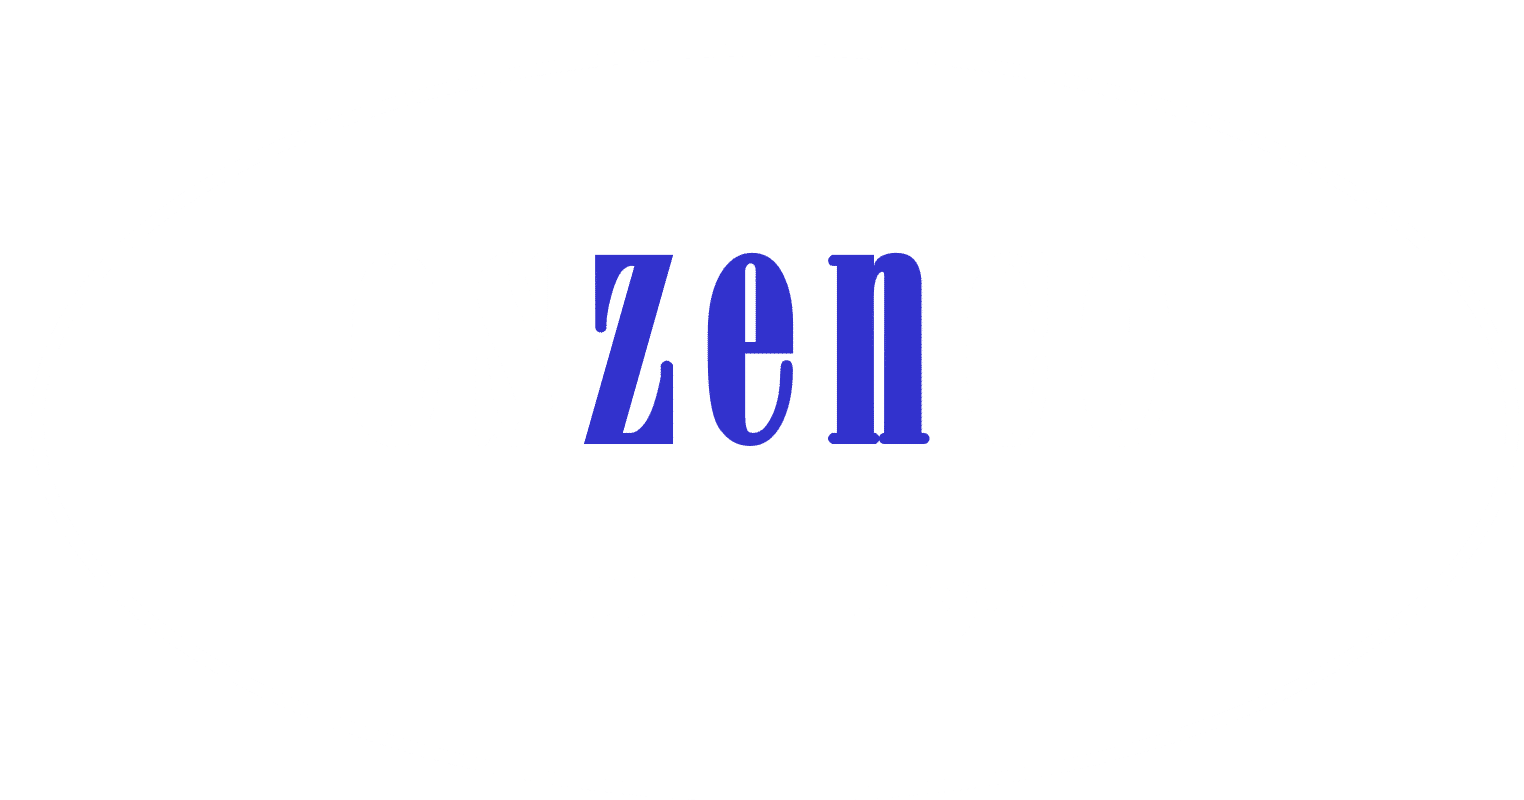 eszence Massage & Spa